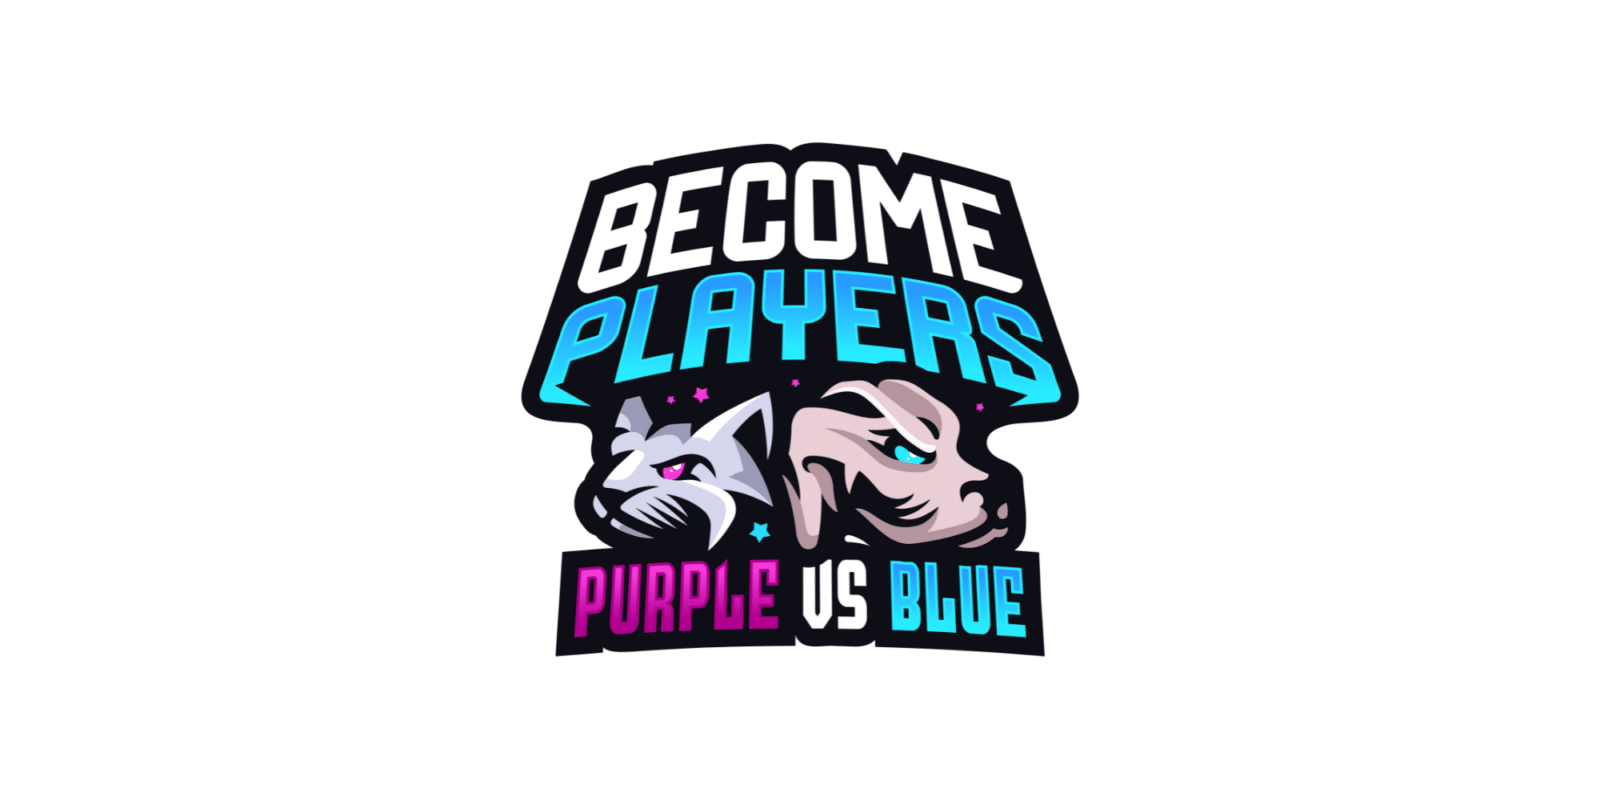 Become Players Purple Vs Blue emblem